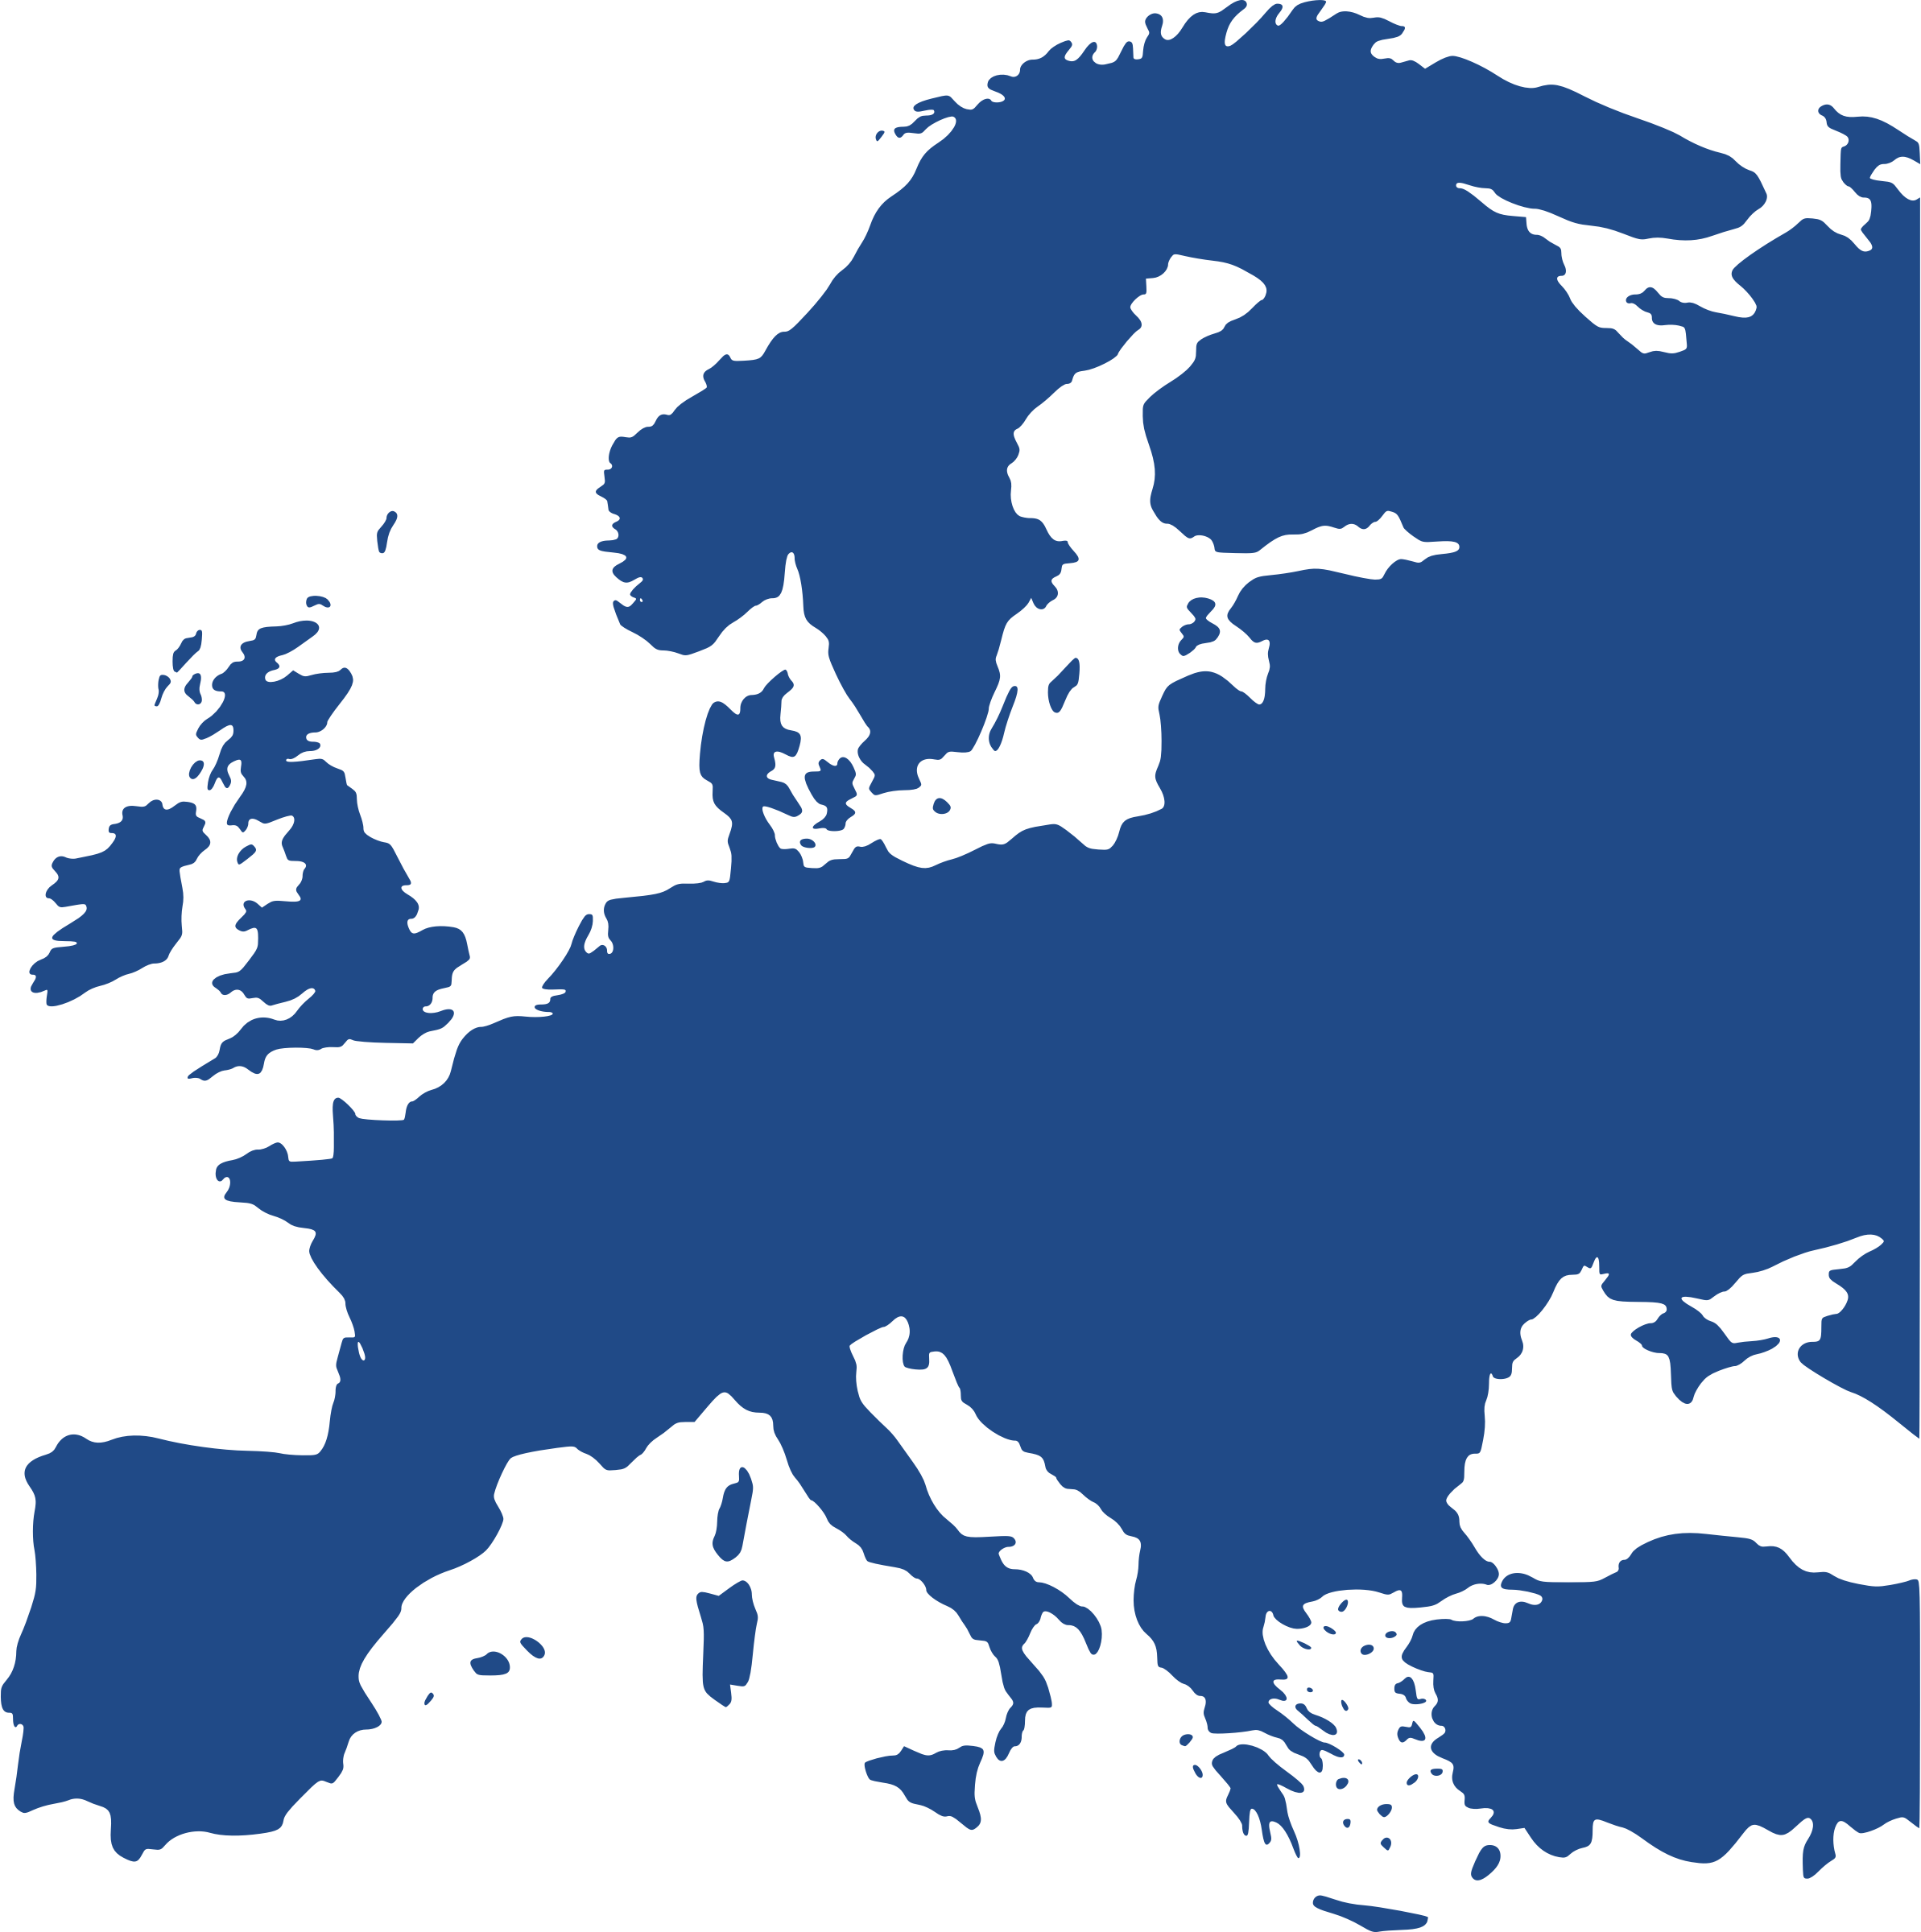 Big Image (Png) - Europe Map, Transparent background PNG HD thumbnail